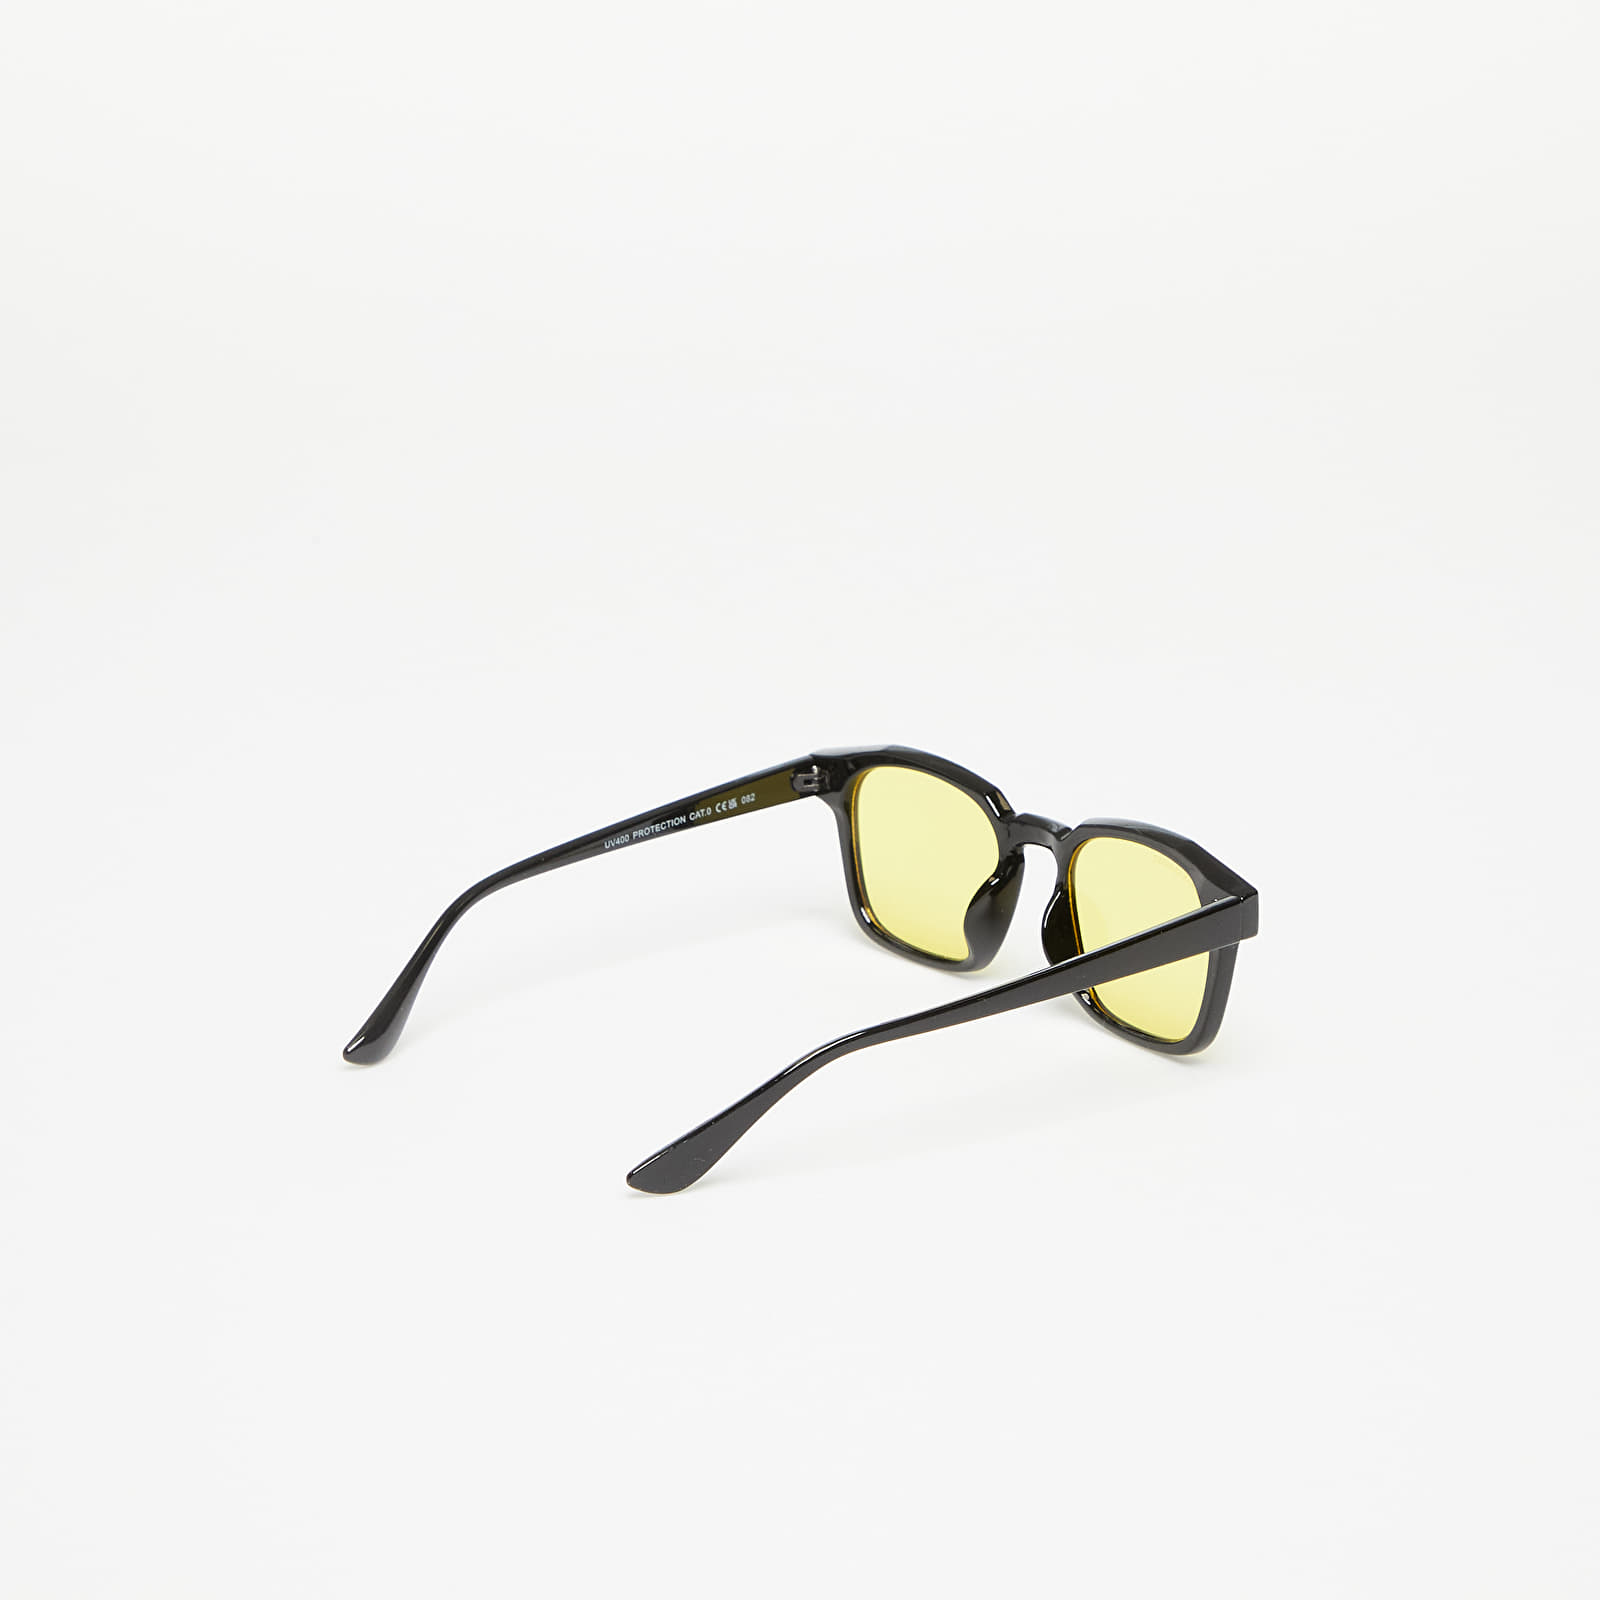 Sunglasses | With Yellowlow Case Urban Black/ Sunglasses Maui Classics Queens